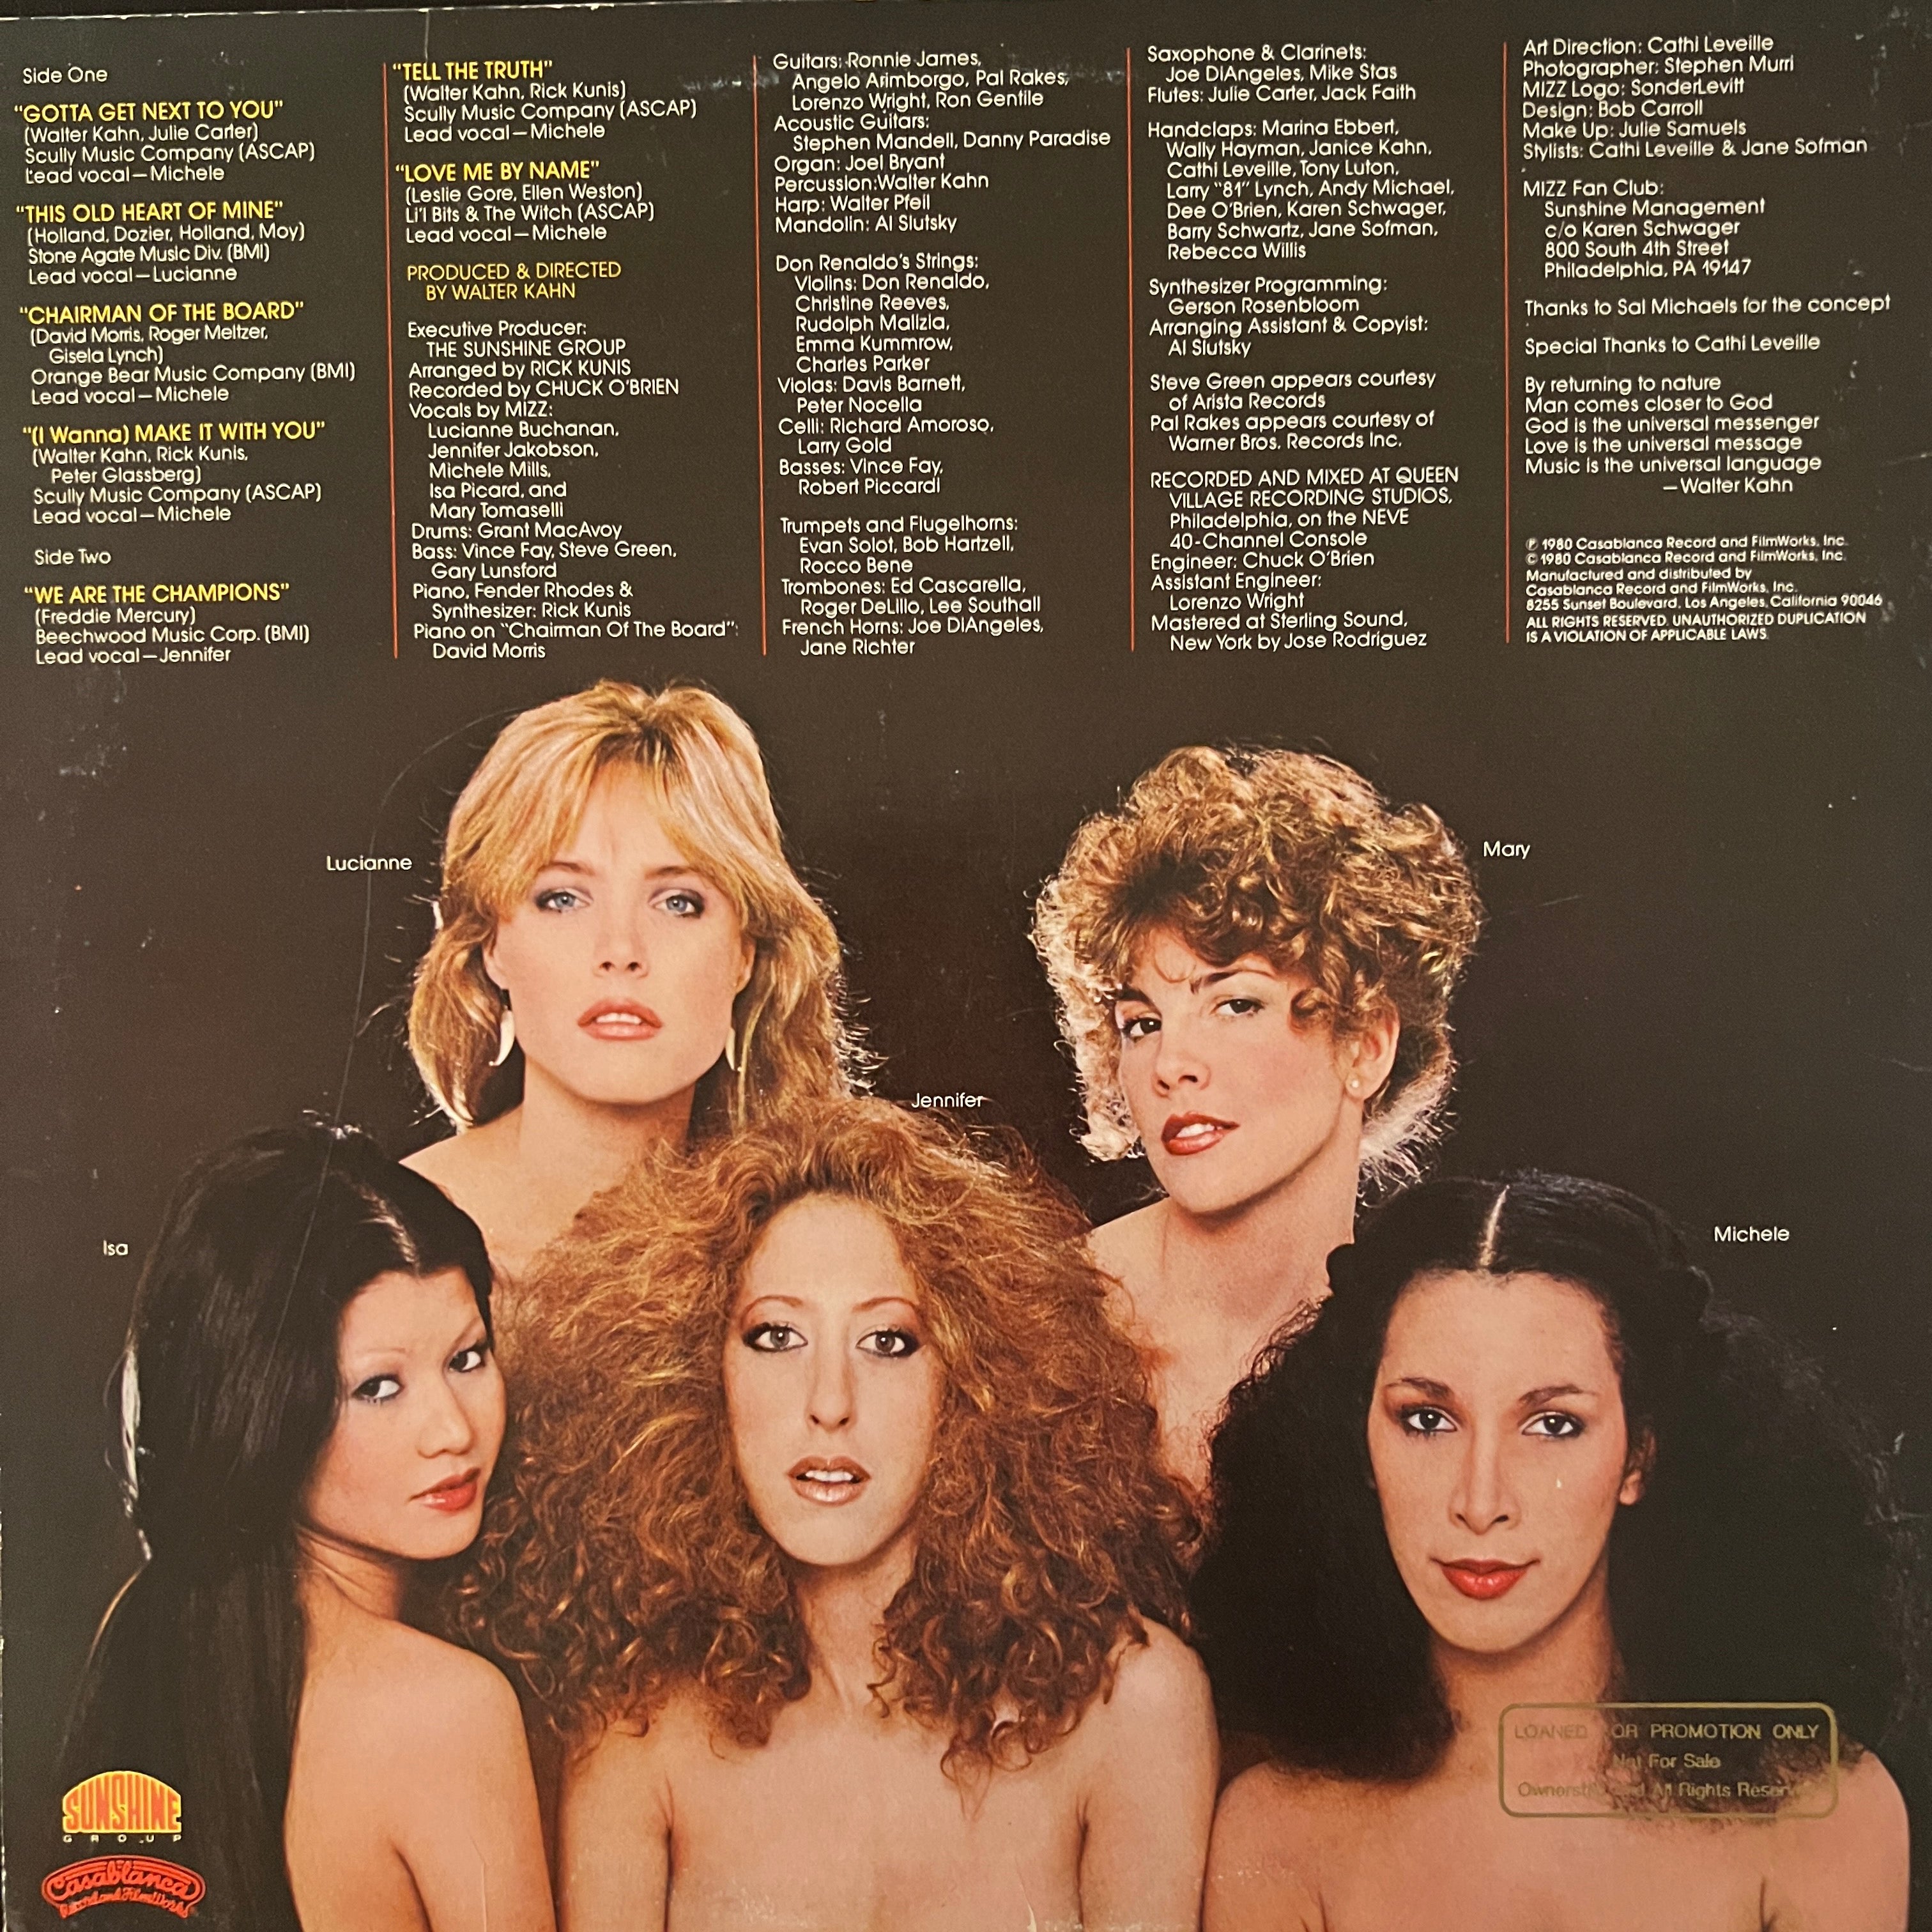 Mizz - Mizz (Vinyl LP) (Casablanca NBLP 7204 DJ) 1980, Promo VG+